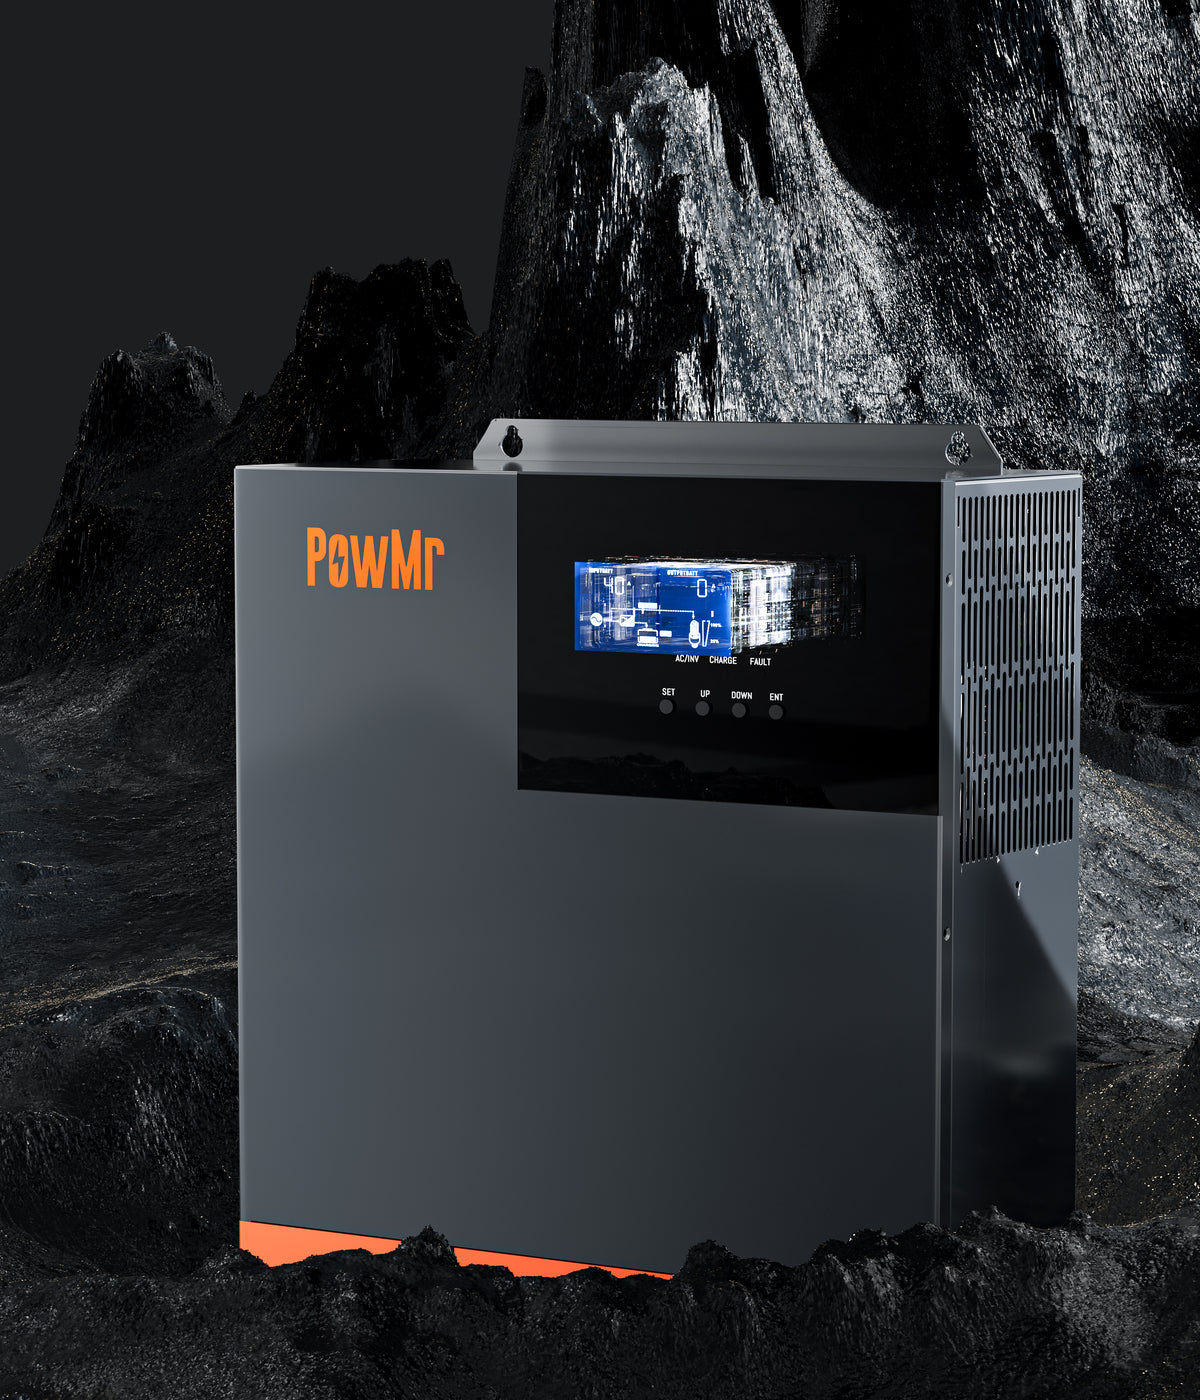 PowMr solar inverter chargers